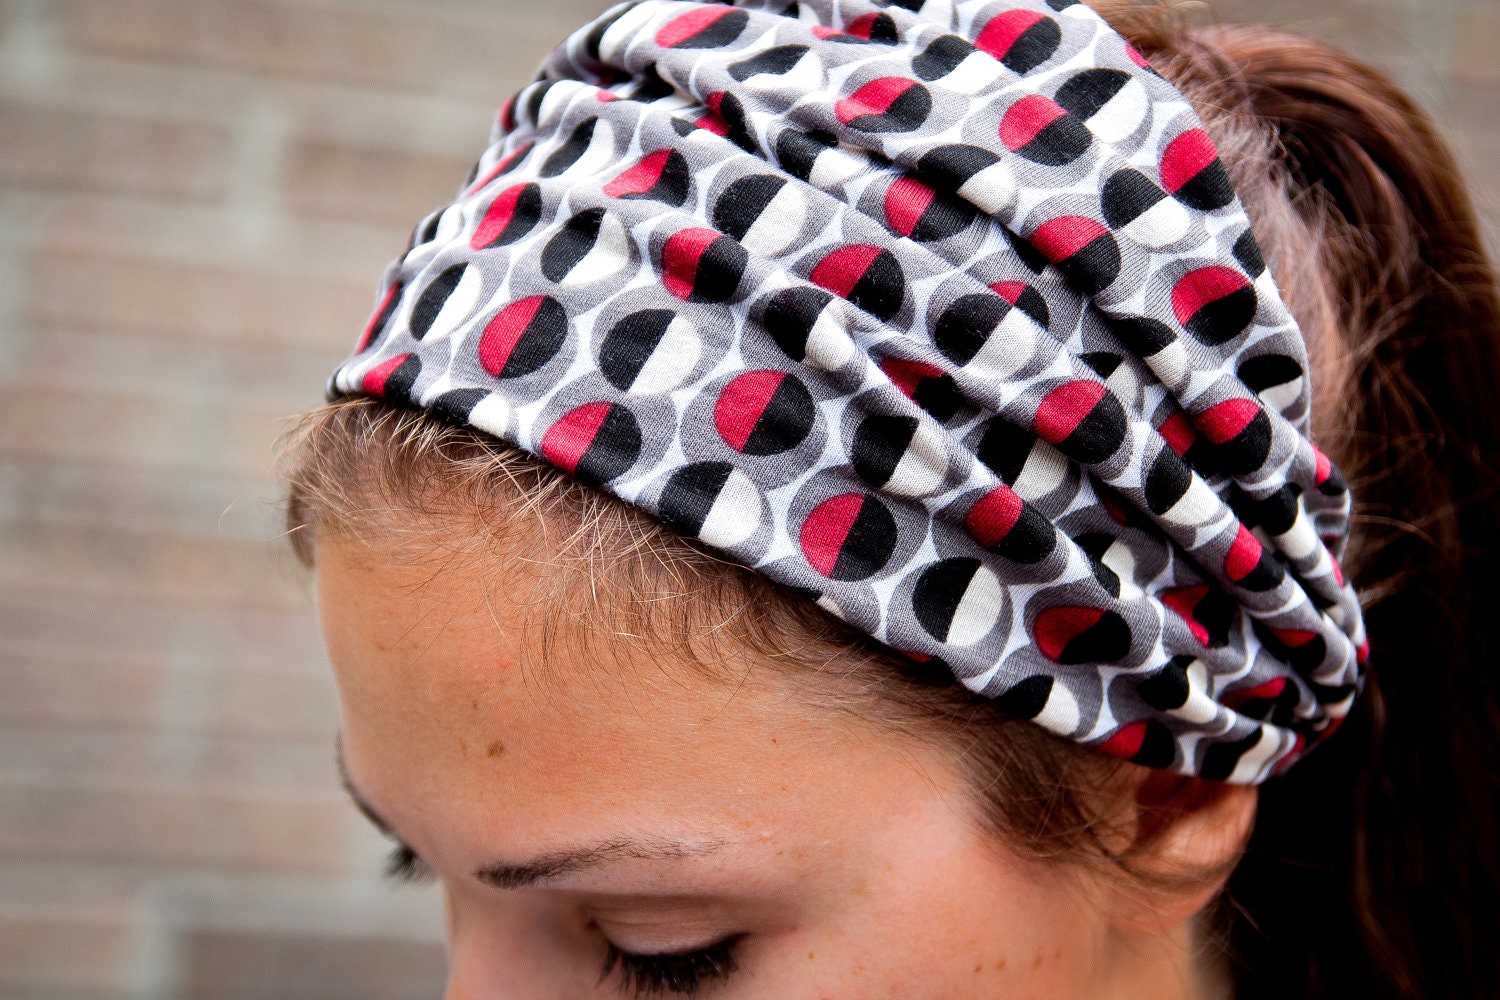 Headband - modern Geo print, "Black, Gray and Red", stretchy fabric headband, women's turban headscarf